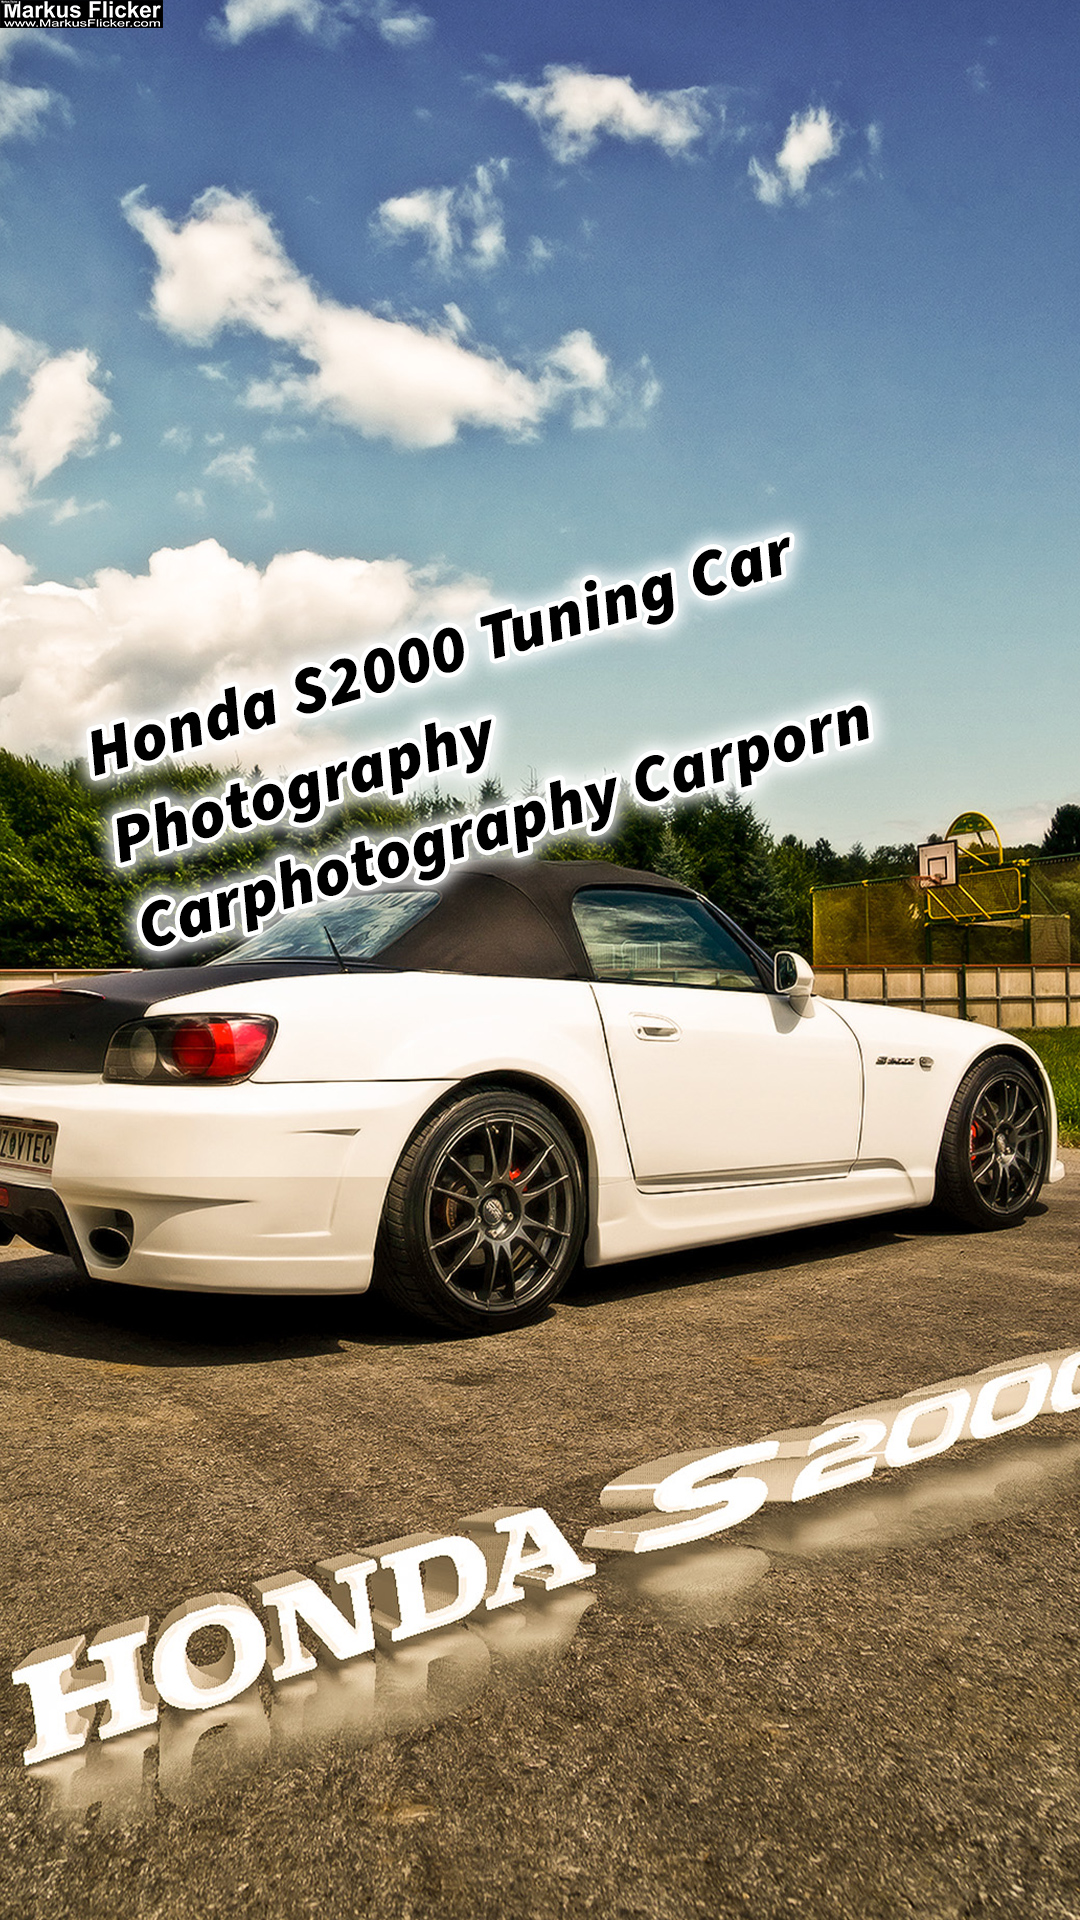 Honda S2000 Tuning Car Photography Carphotography Carporn mit Smartphone, Handy, und professioneller Kamera